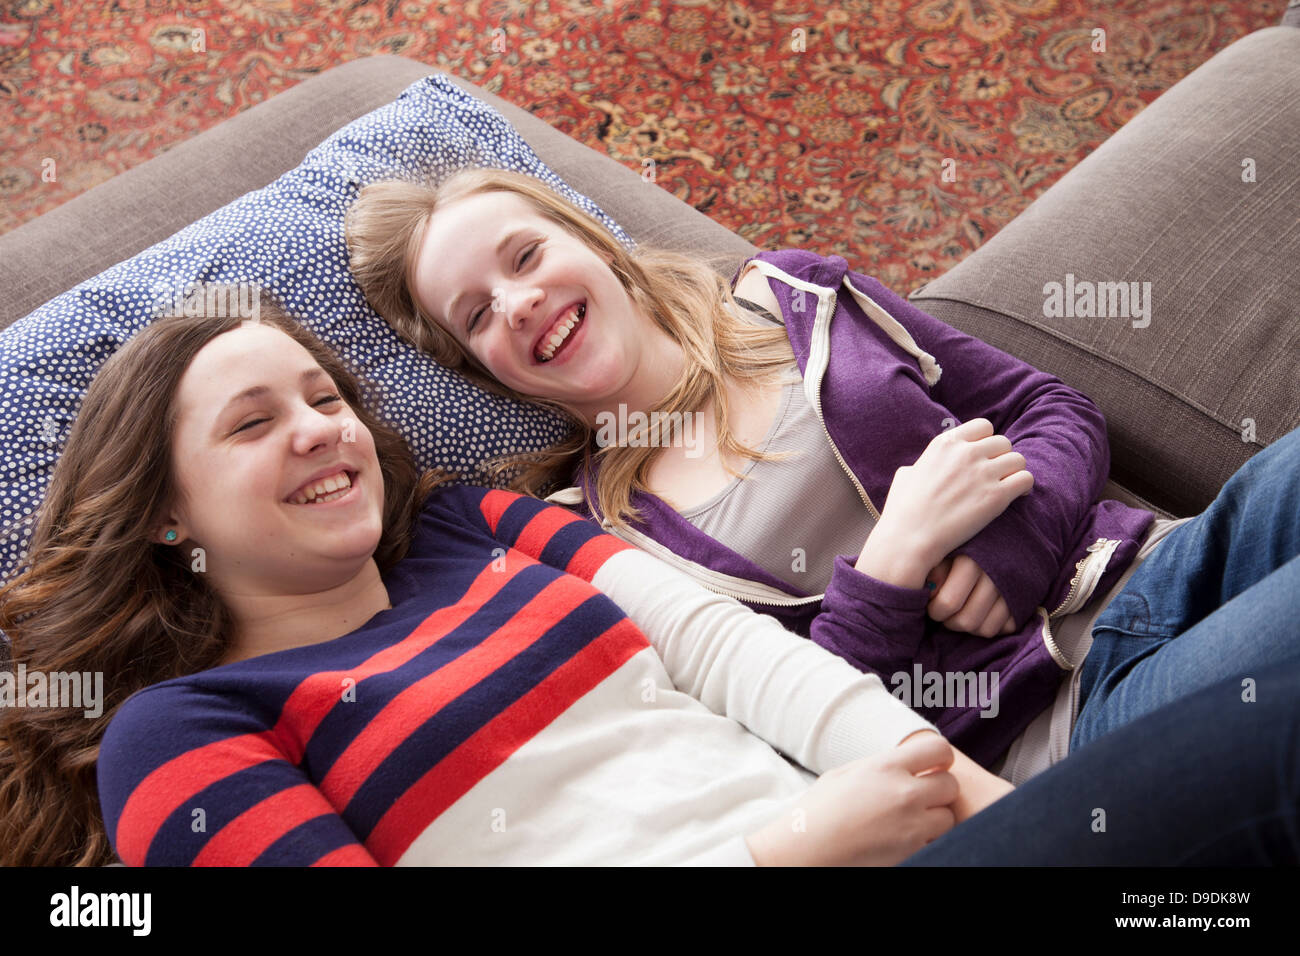 Girls lying on sofa giggling Stock Photo